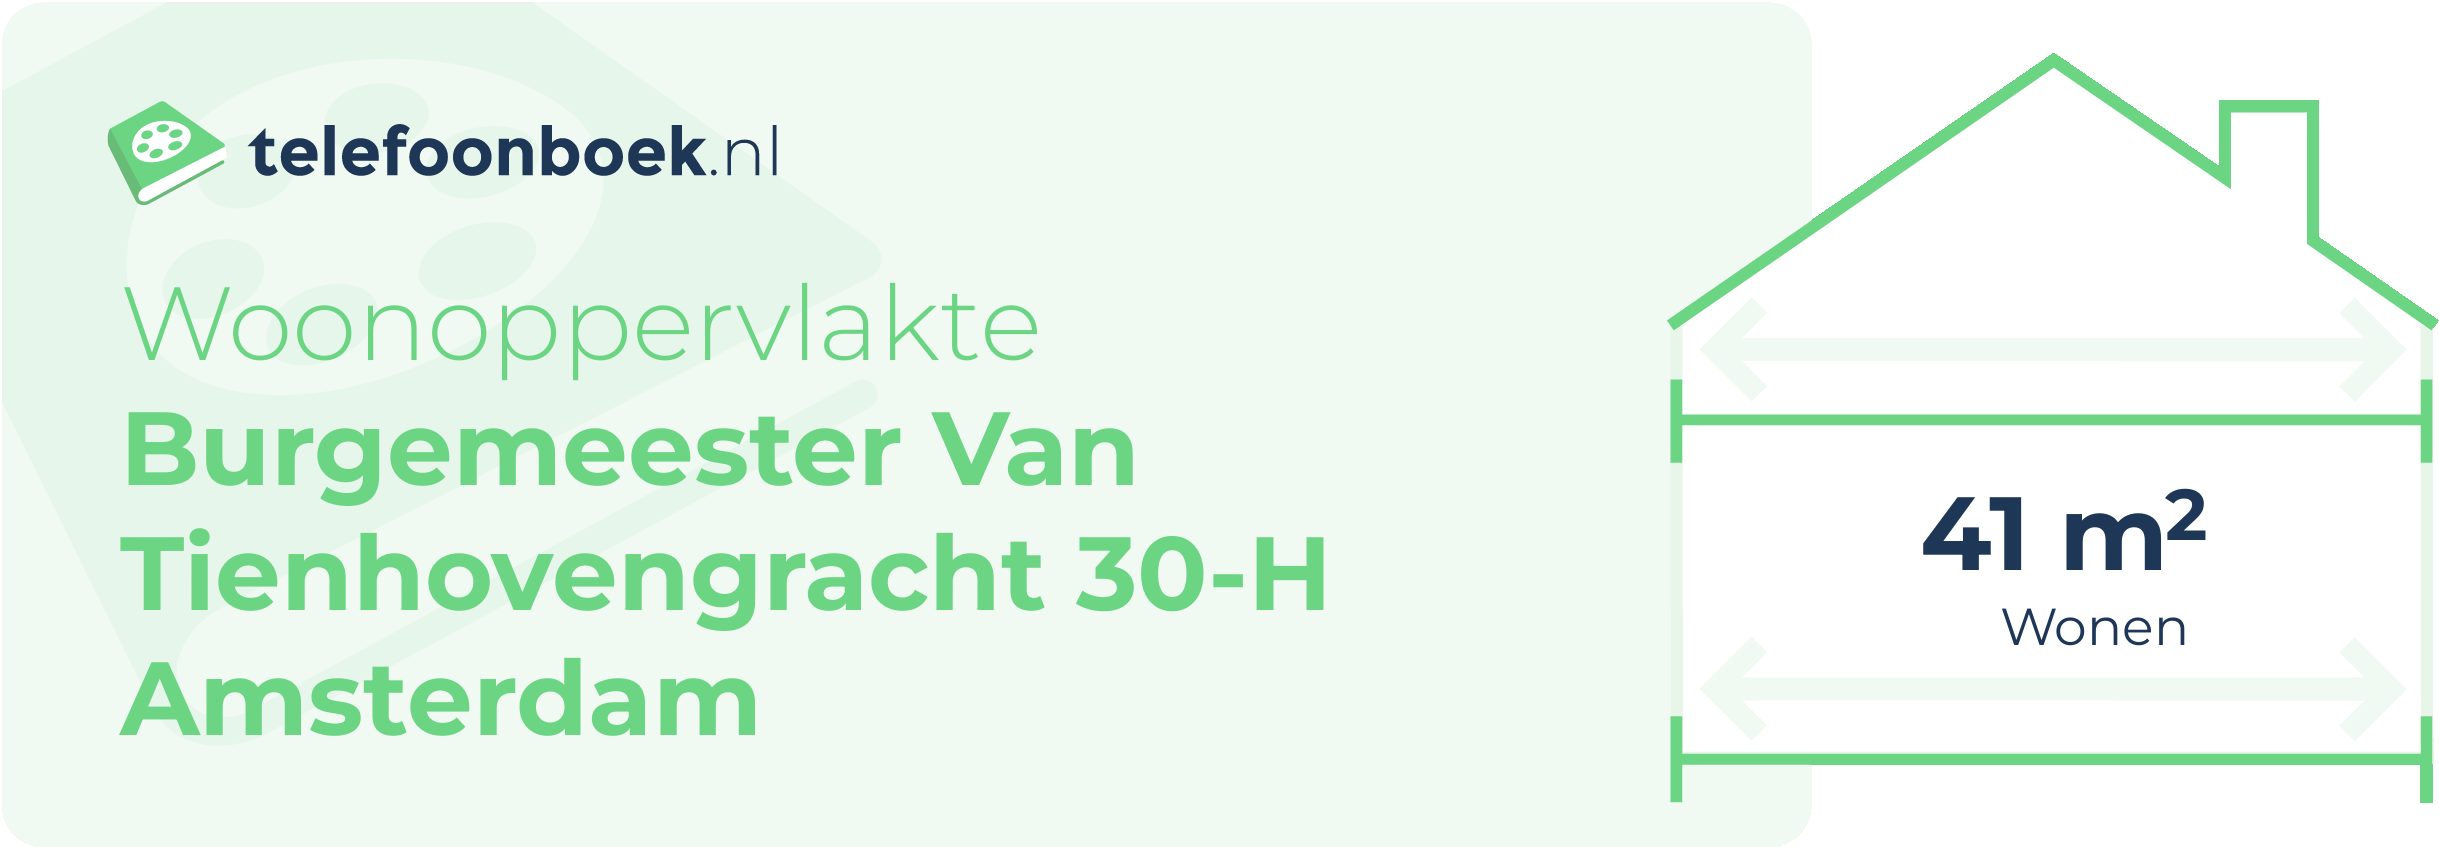 Woonoppervlakte Burgemeester Van Tienhovengracht 30-H Amsterdam